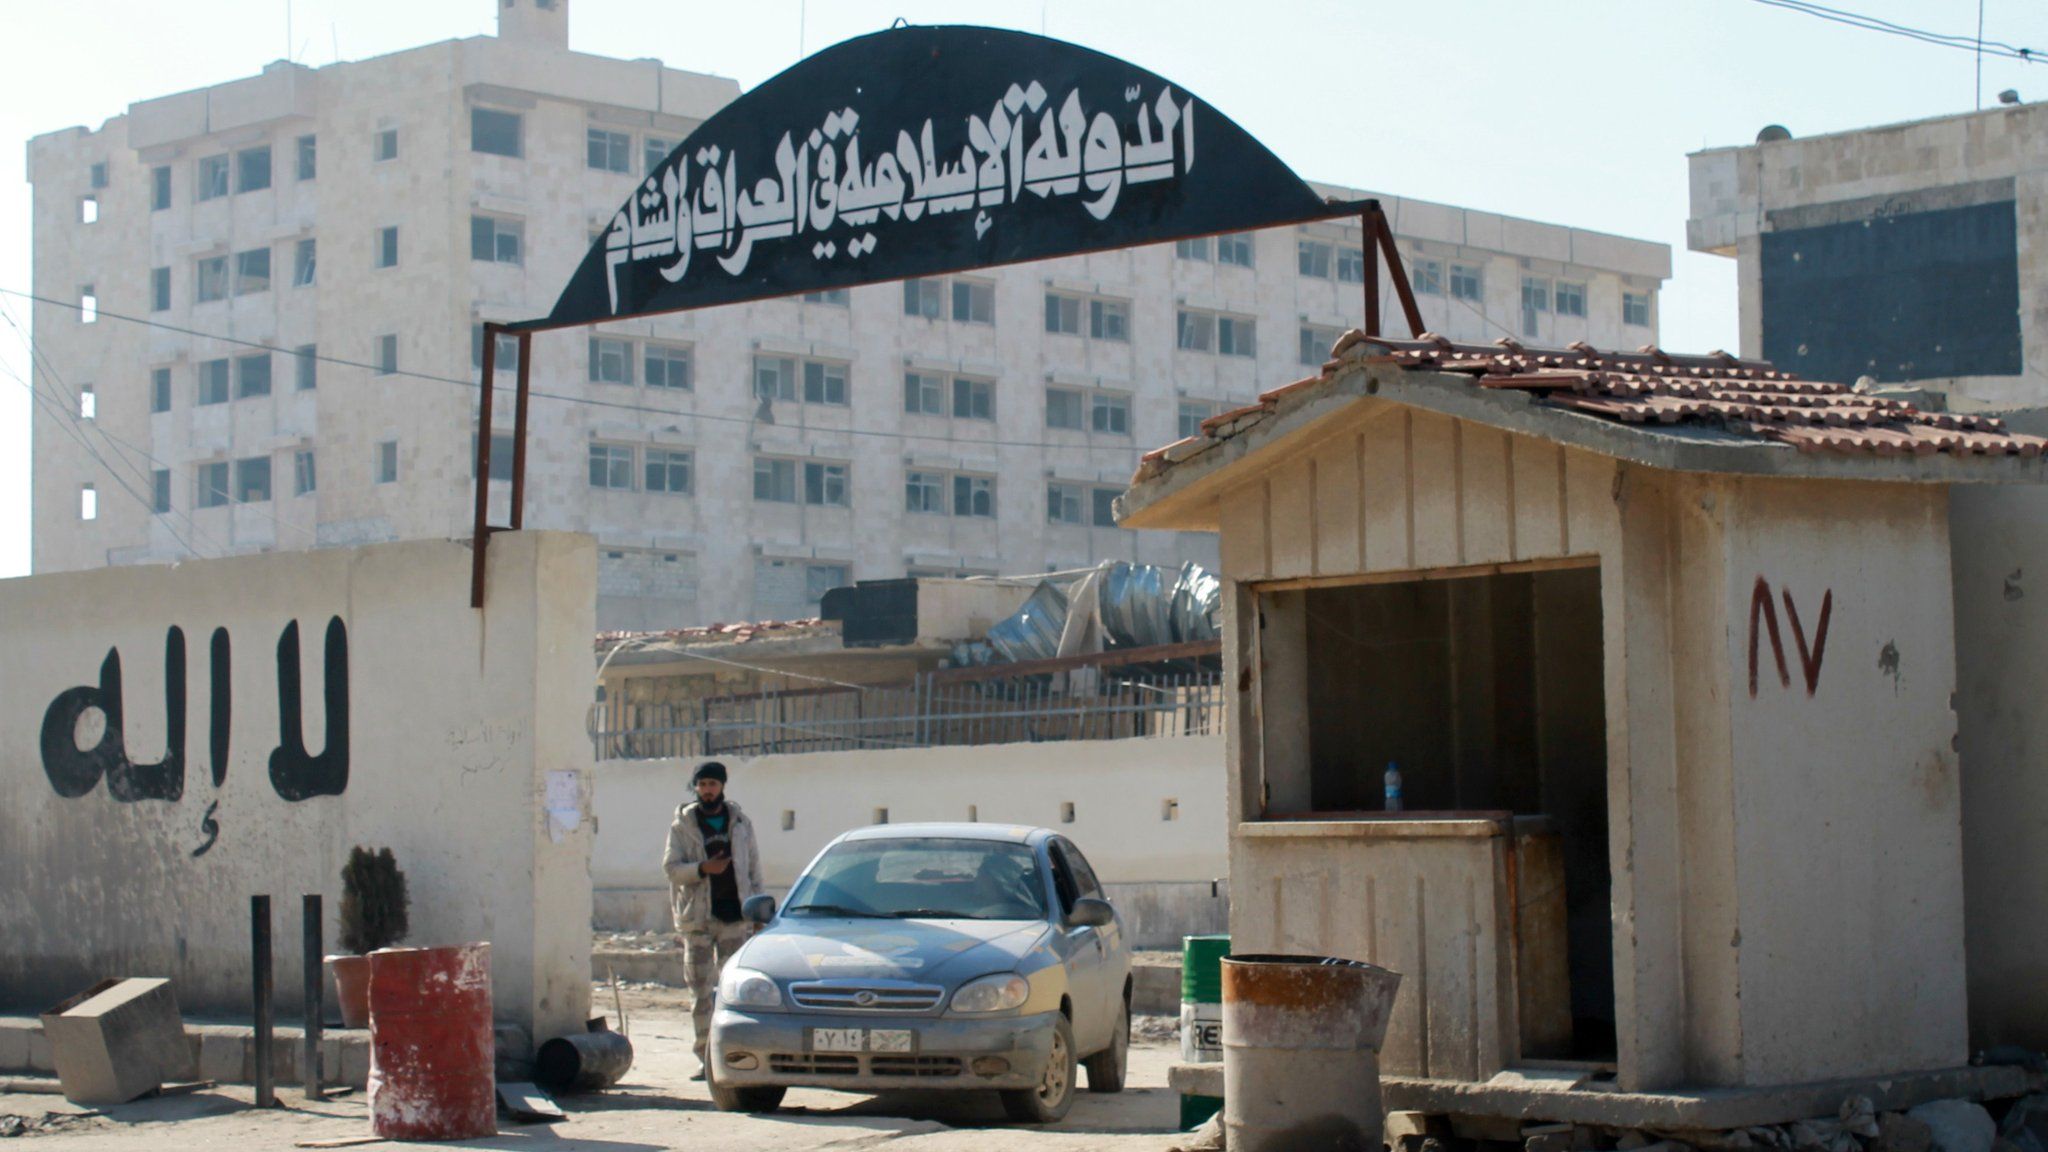 Islamic State headquarters in Aleppo, Syria